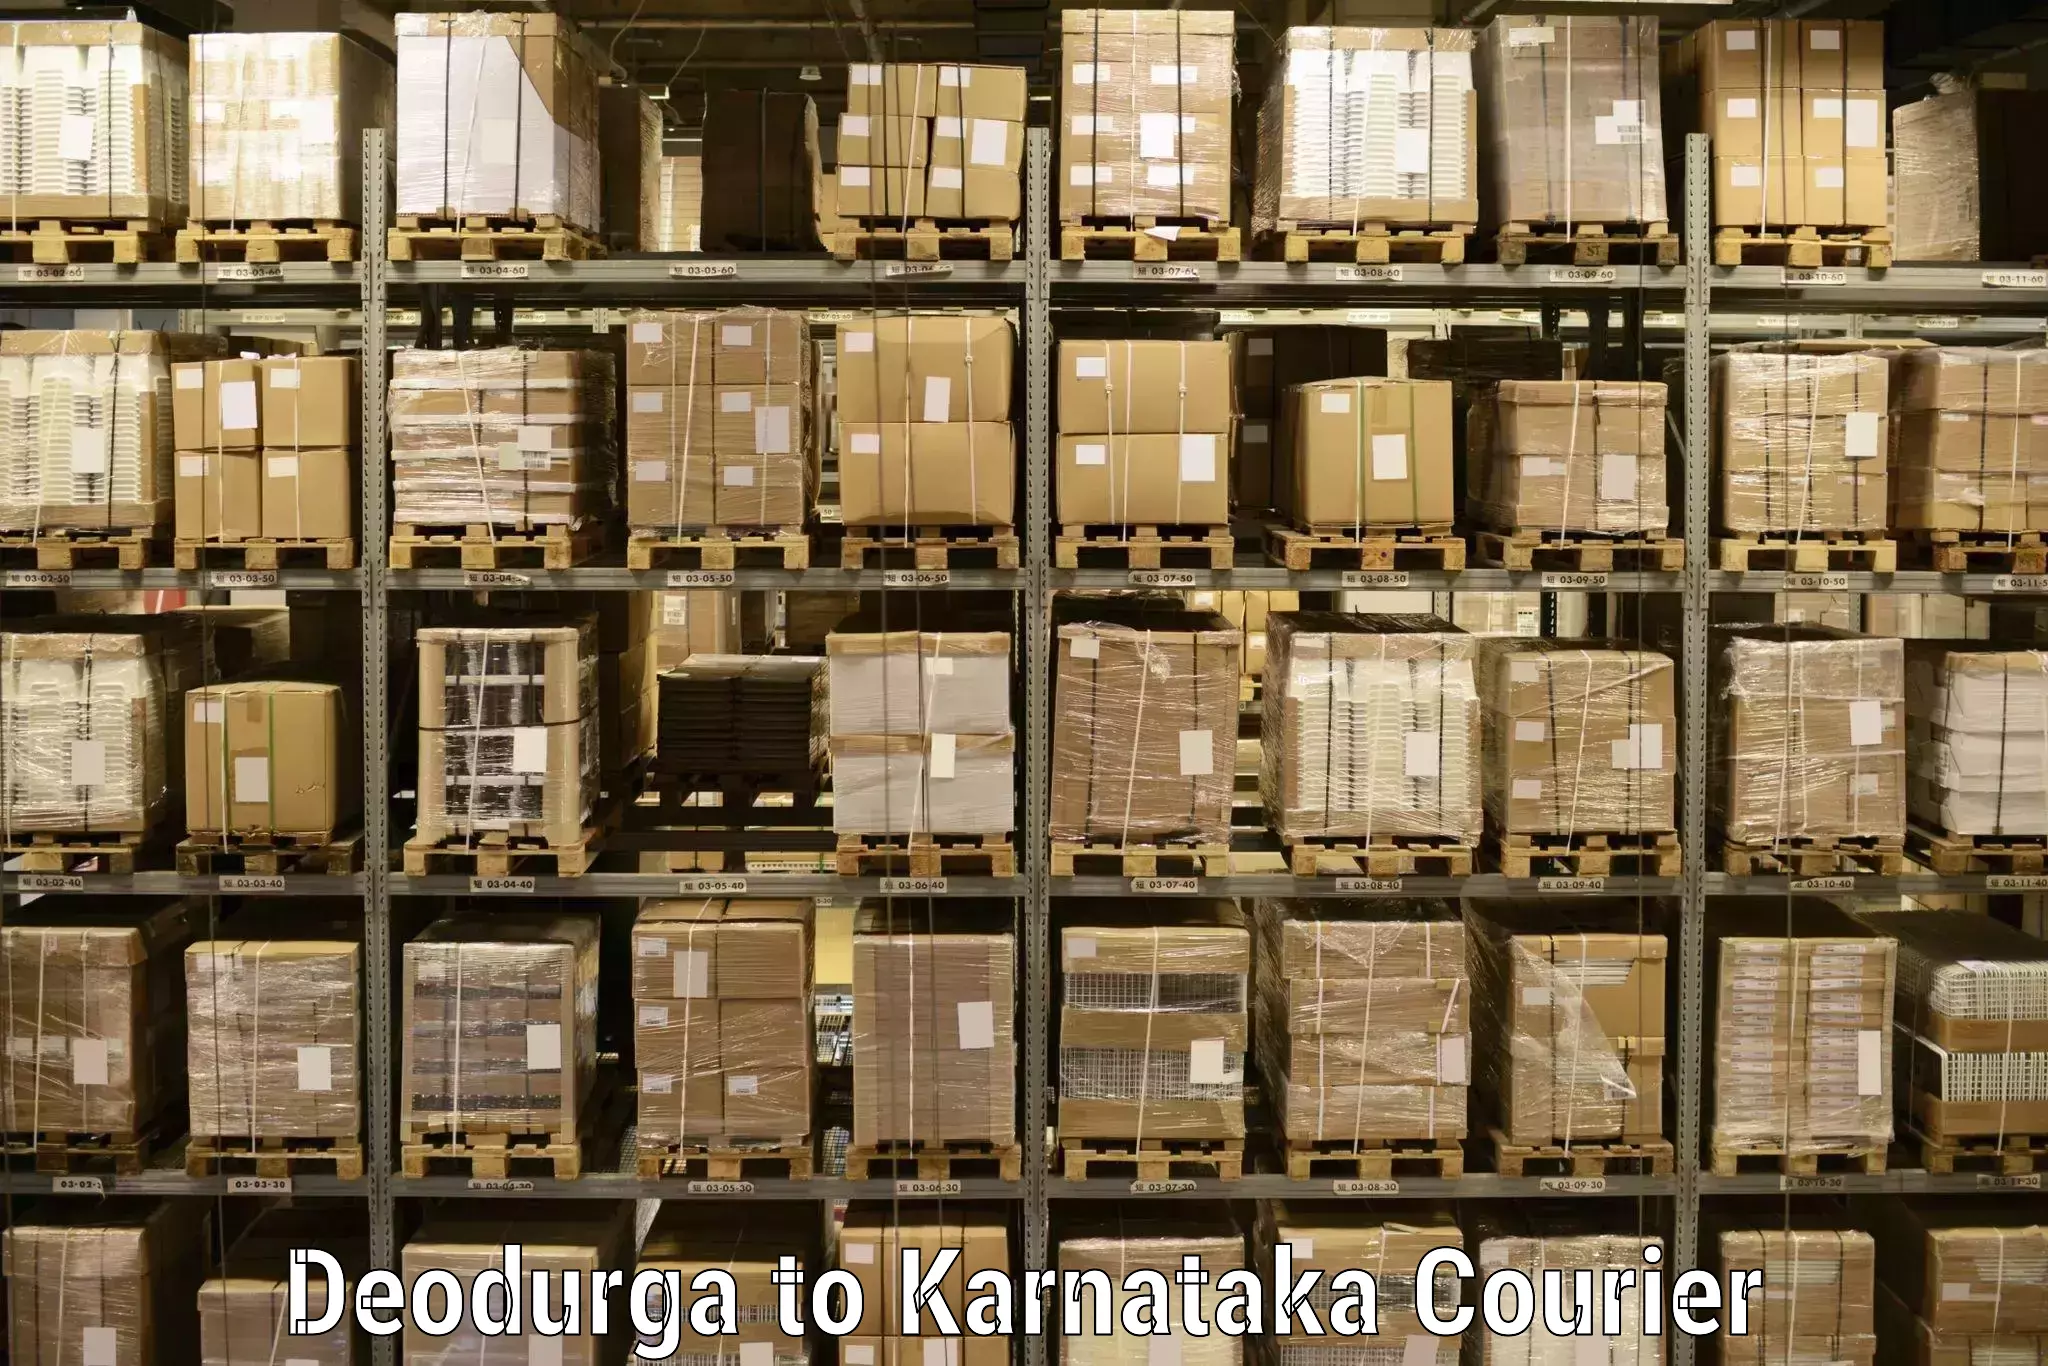 Package delivery network Deodurga to Hosadurga